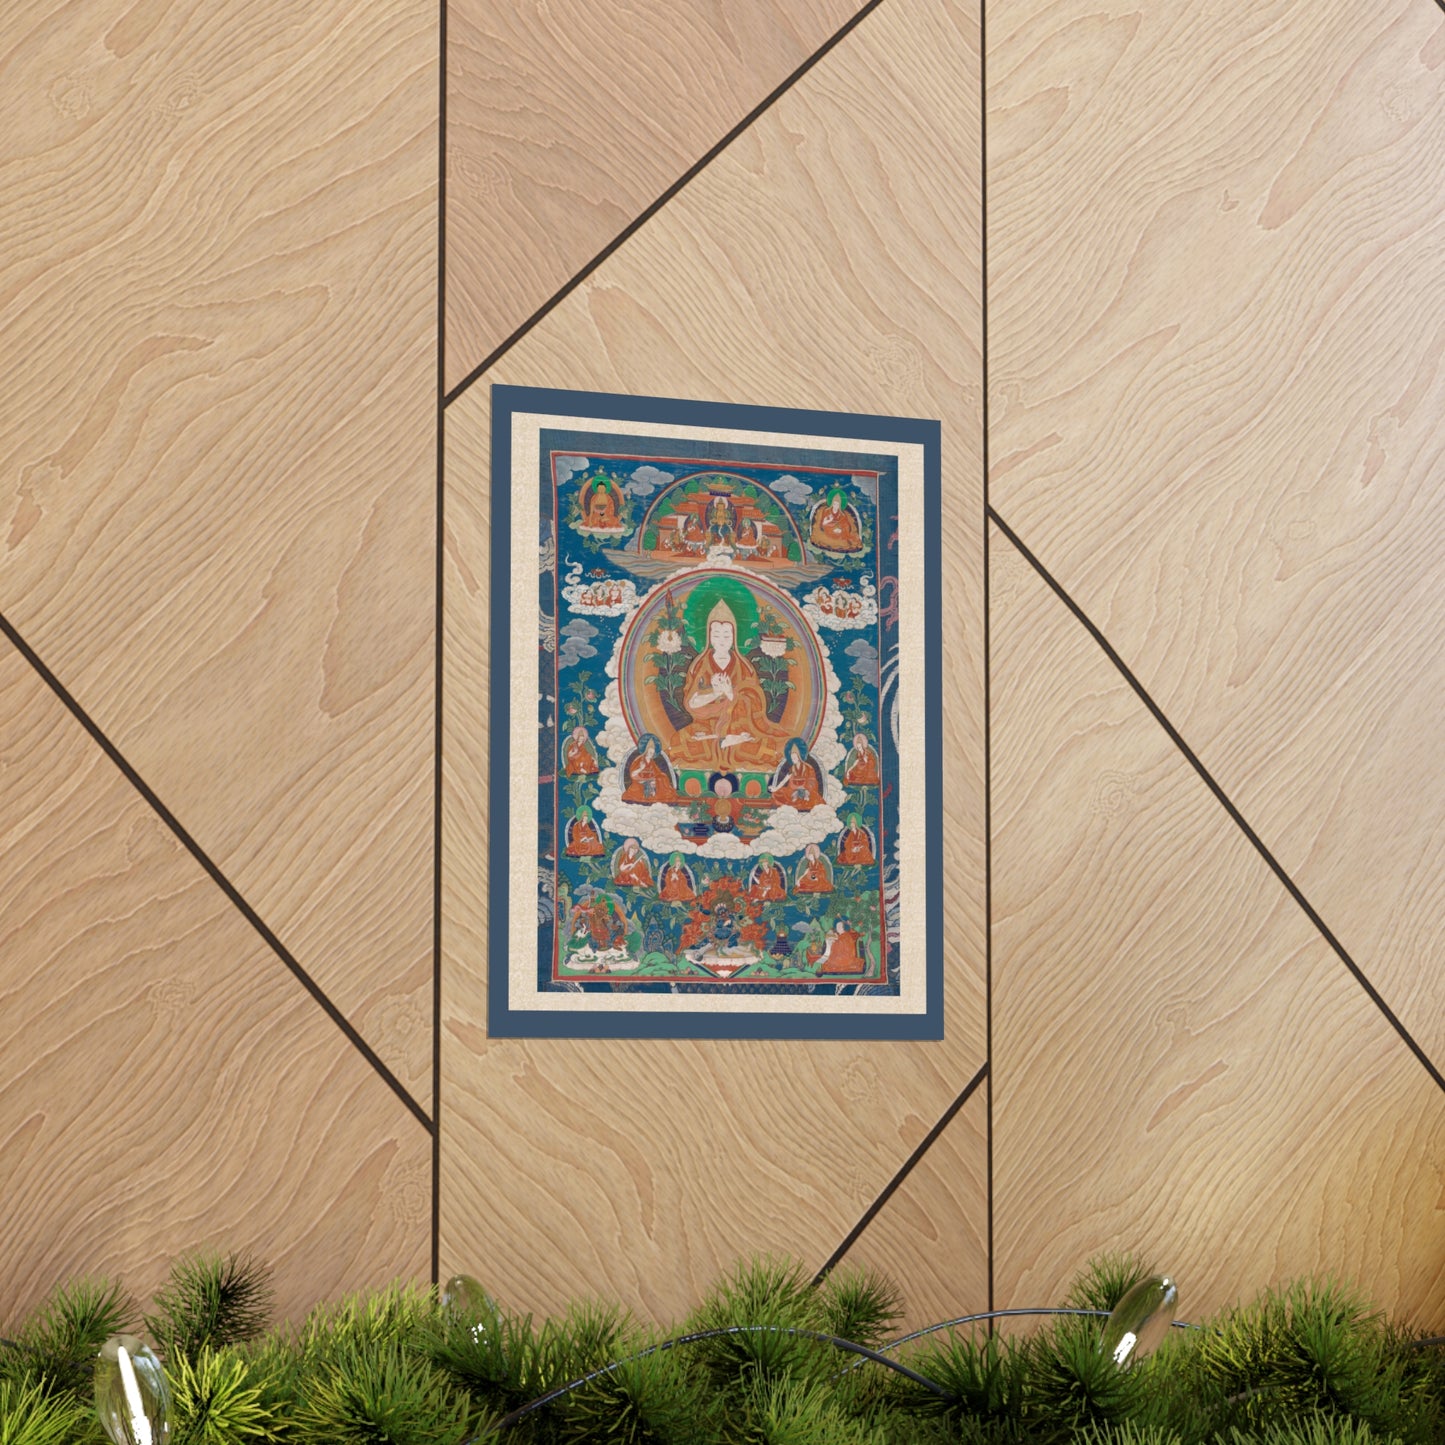 Tsong-Kha-Pa Blo-Bzang-Grags-Pa Tibetan Painted Scroll Poster